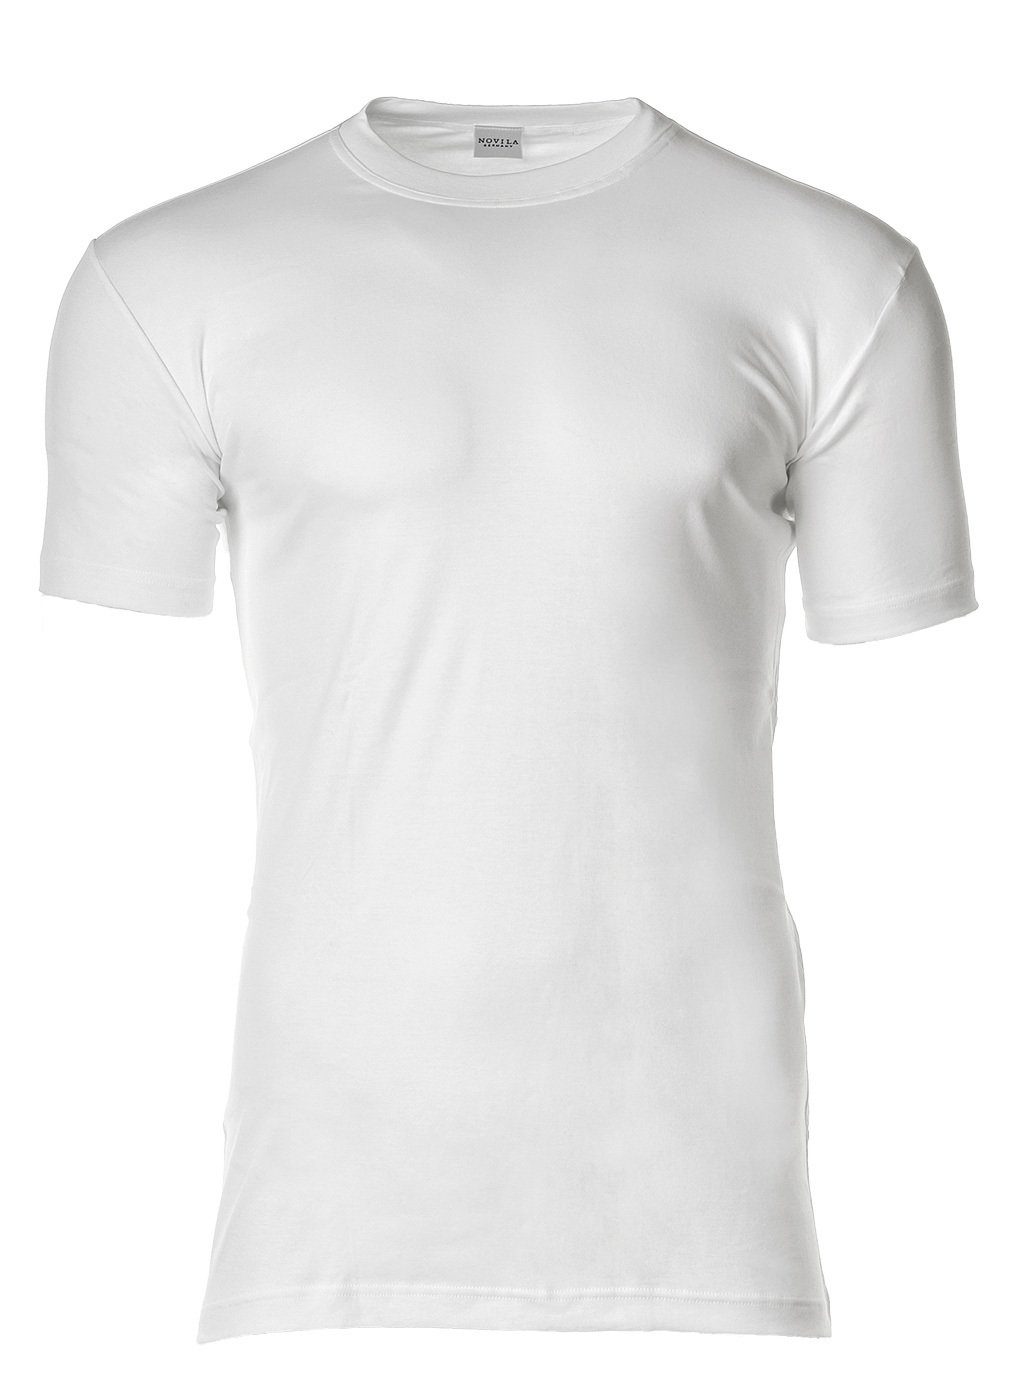 Novila T-Shirt Herren American-Shirt - Rundhals, Natural Weiß Comfort